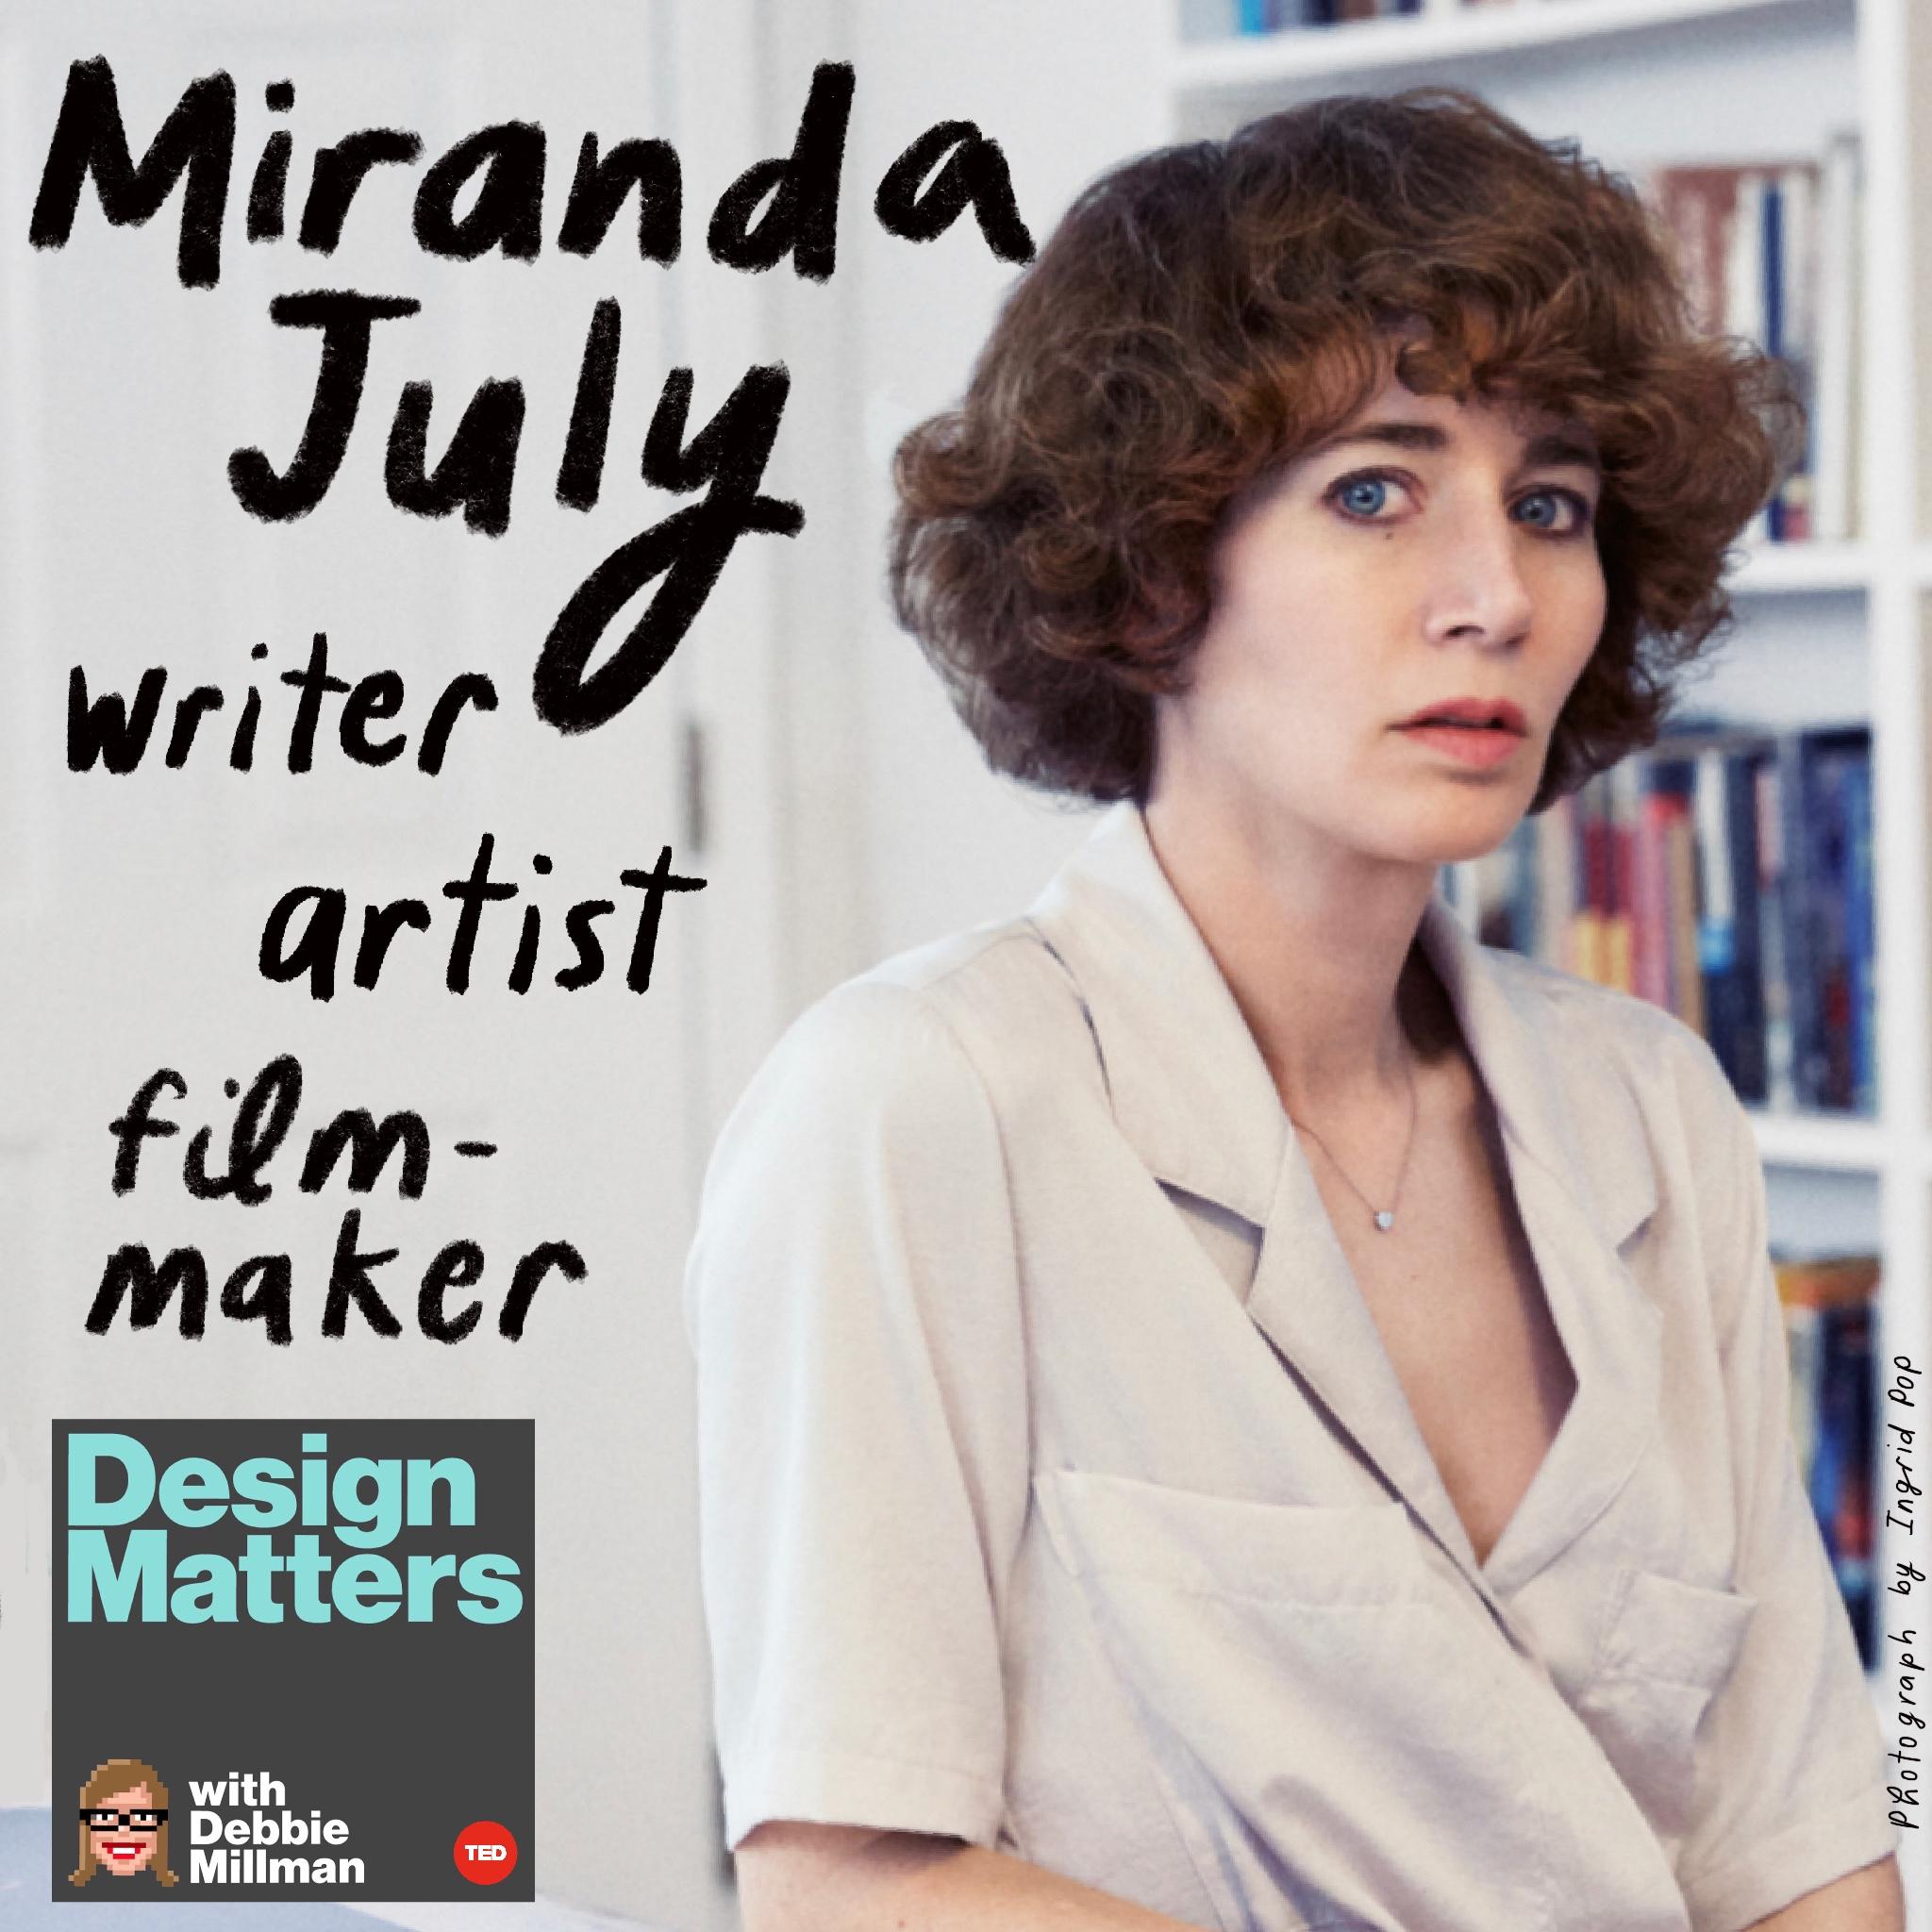 Thumbnail for "Miranda July".